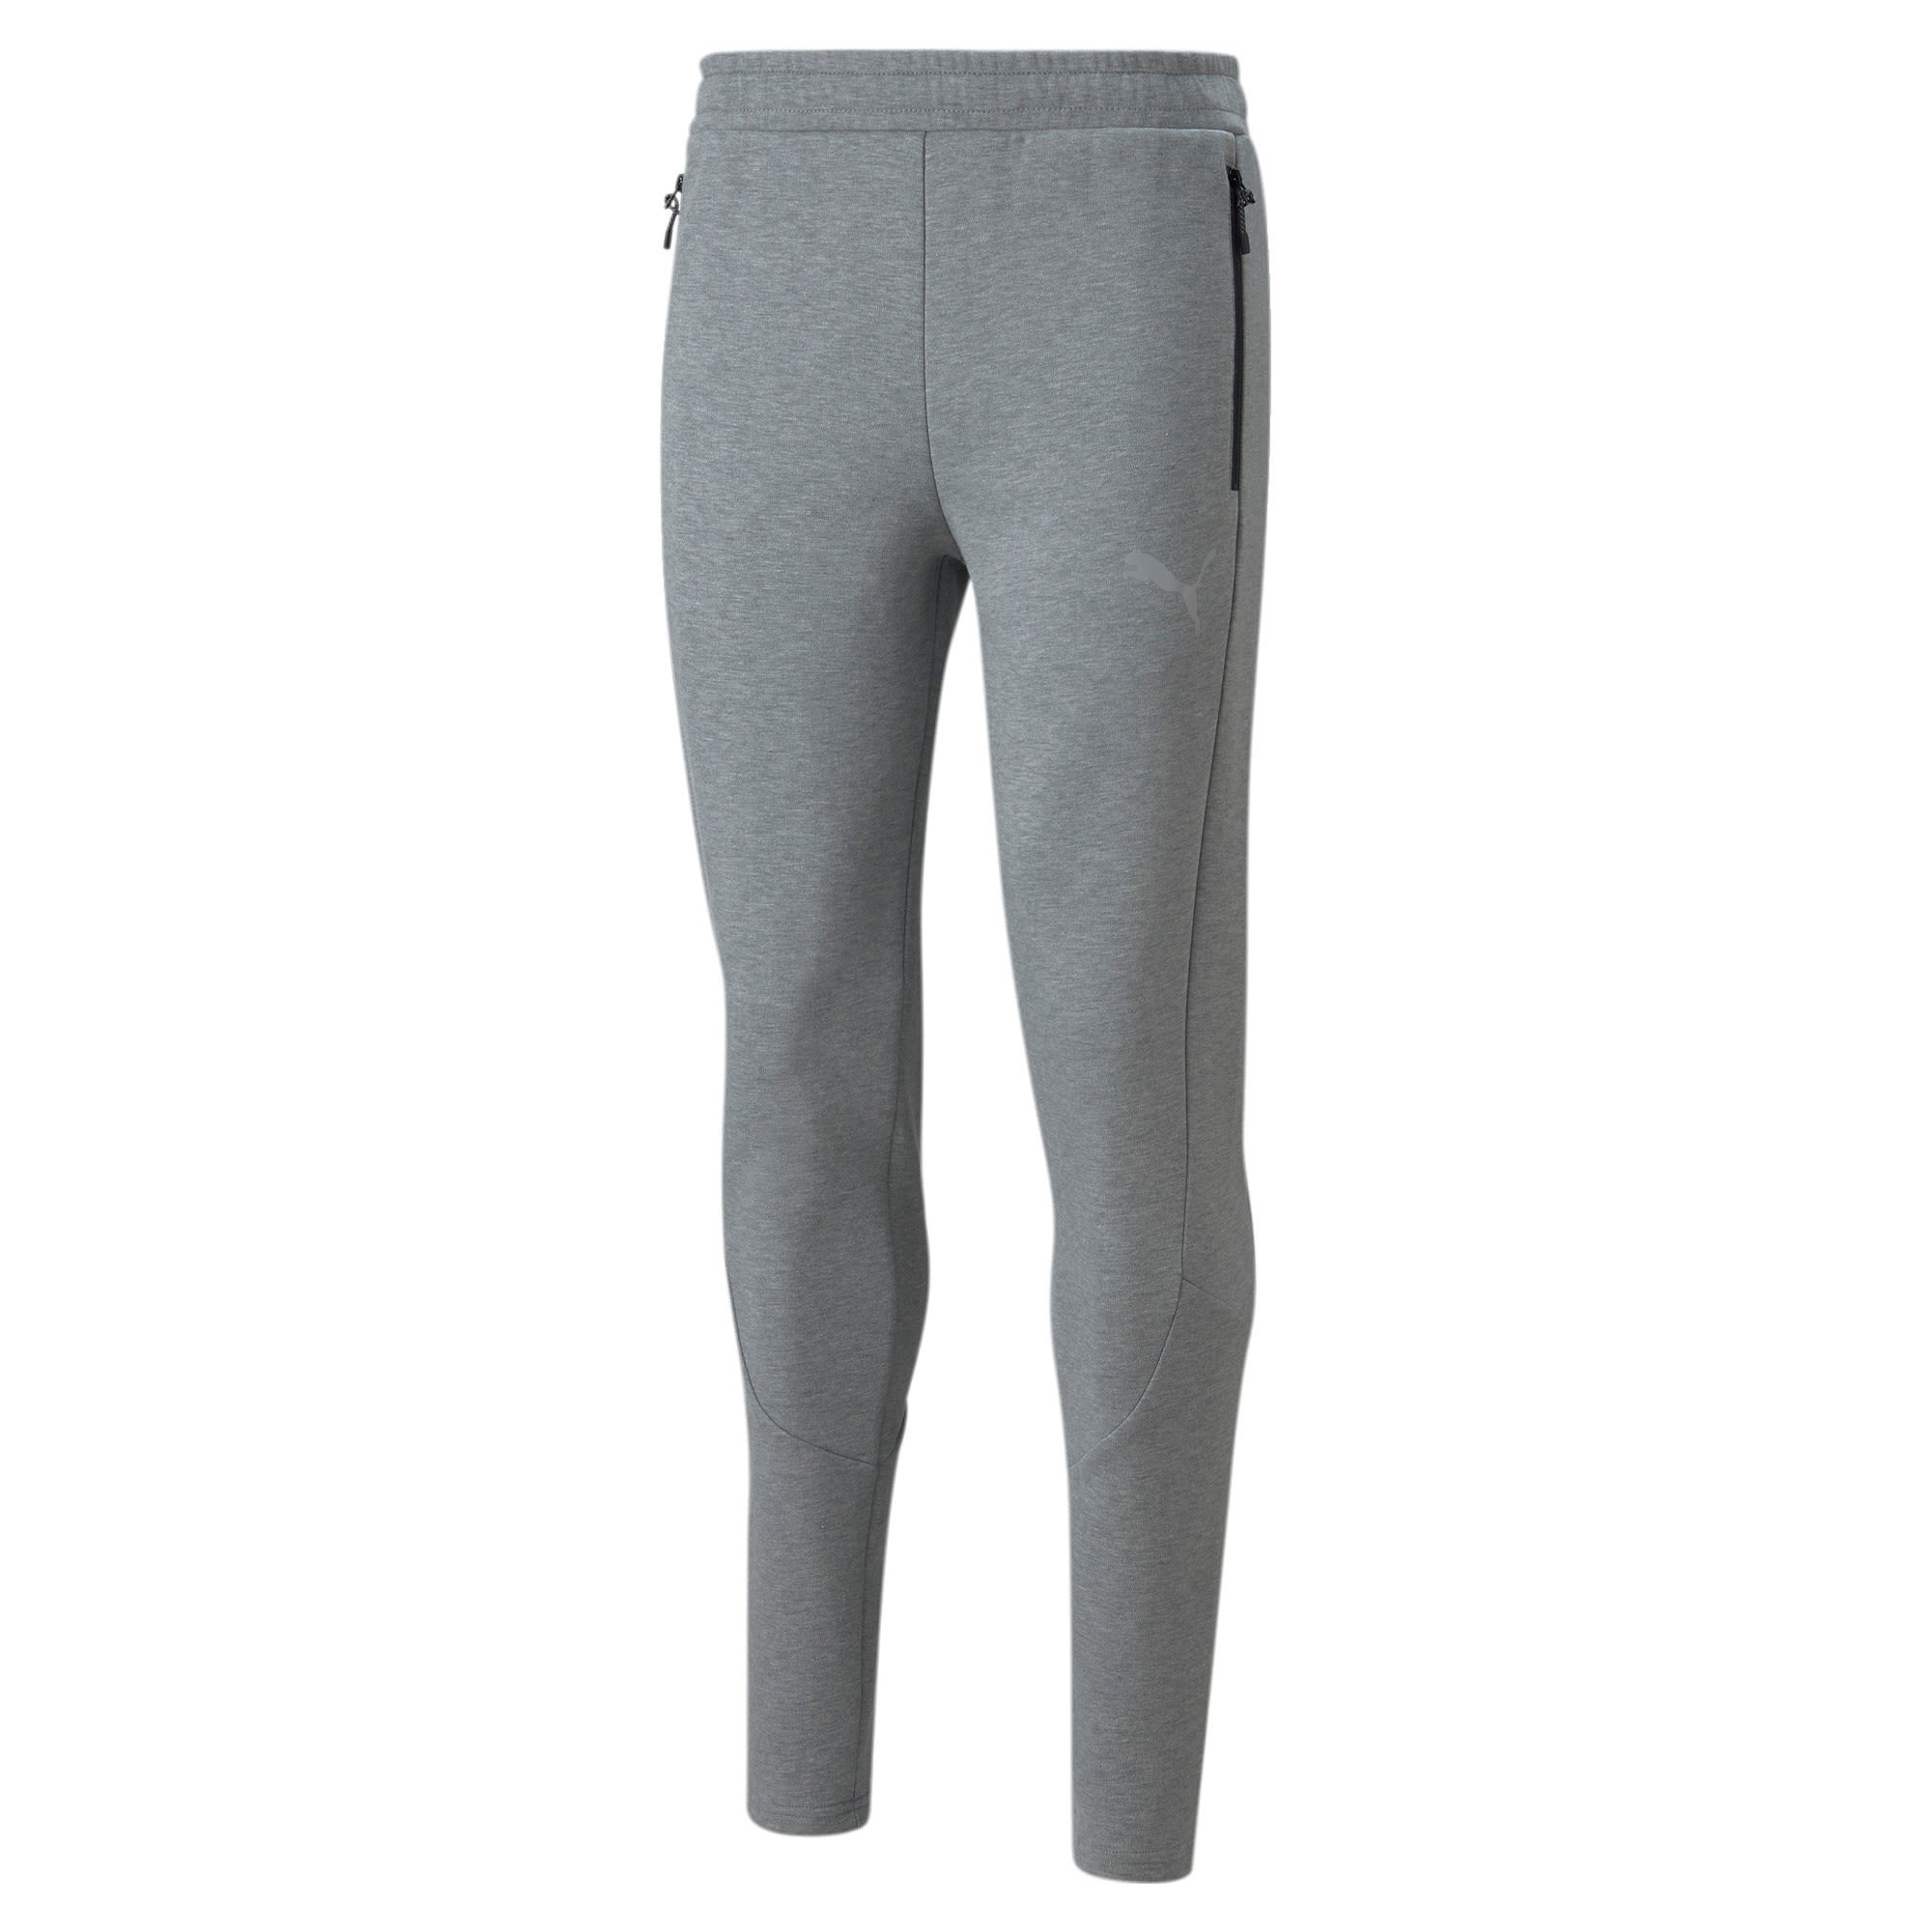 Puma Evostripe Pants Grau- Male Softshellhosen- Grsse XXL - Farbe Medium Gray Heather